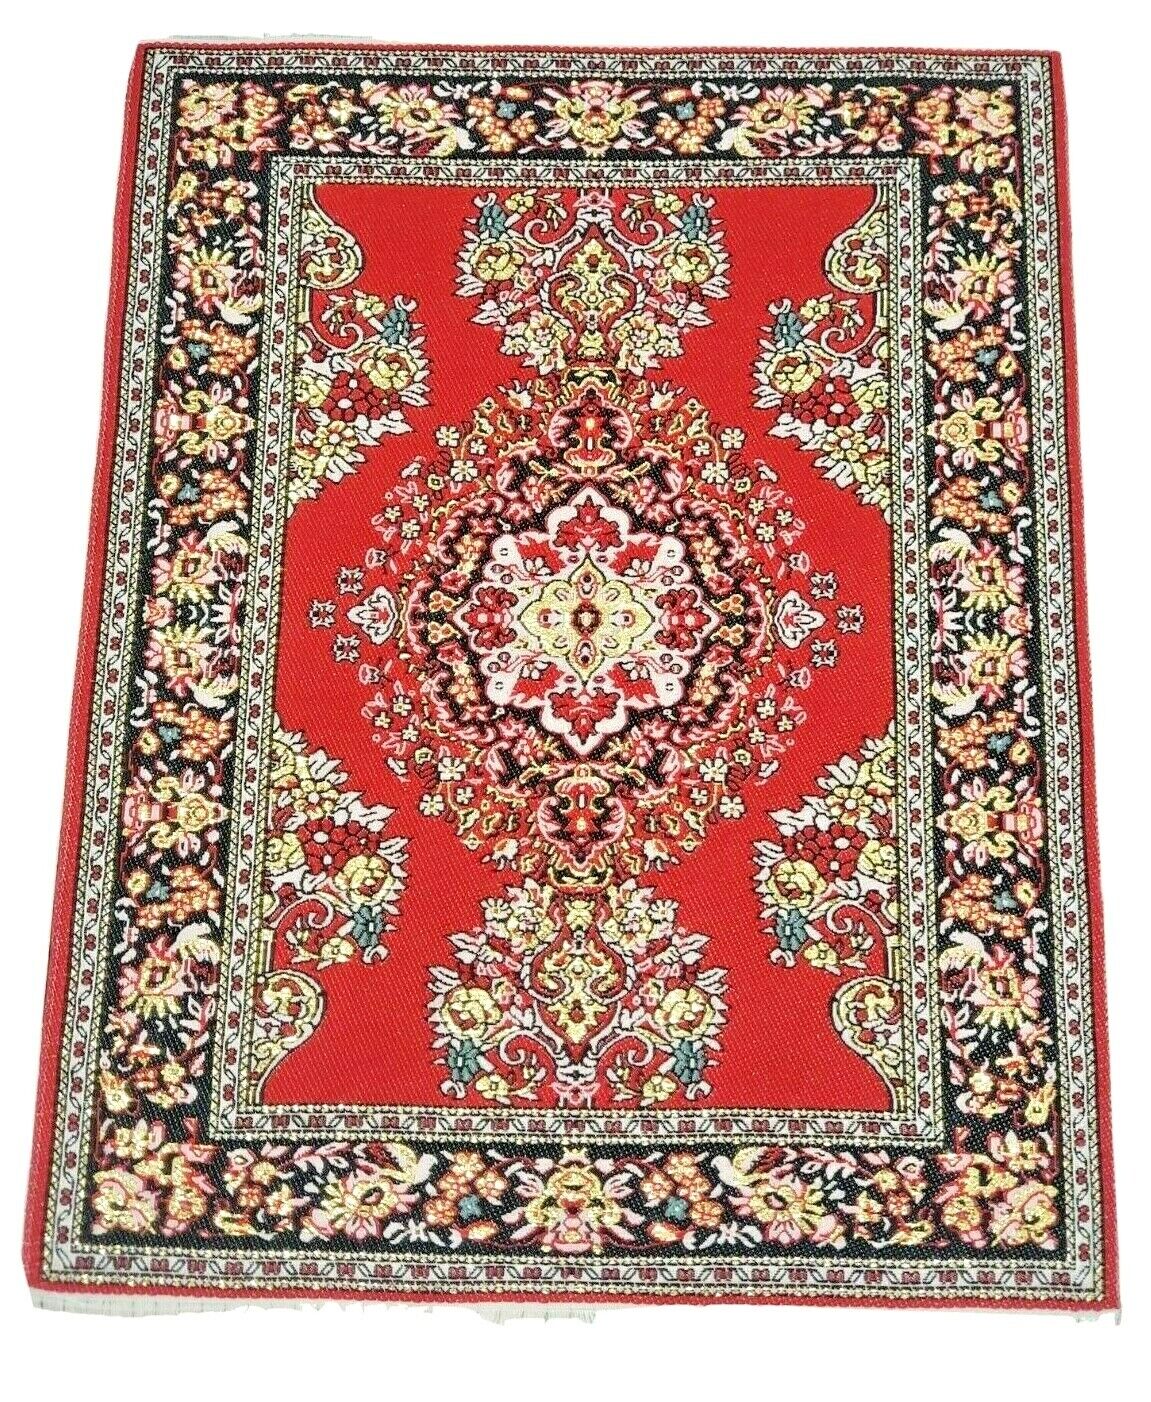 11''x 8'' Woven Big Mouse Pad - Turkish Carpet Design